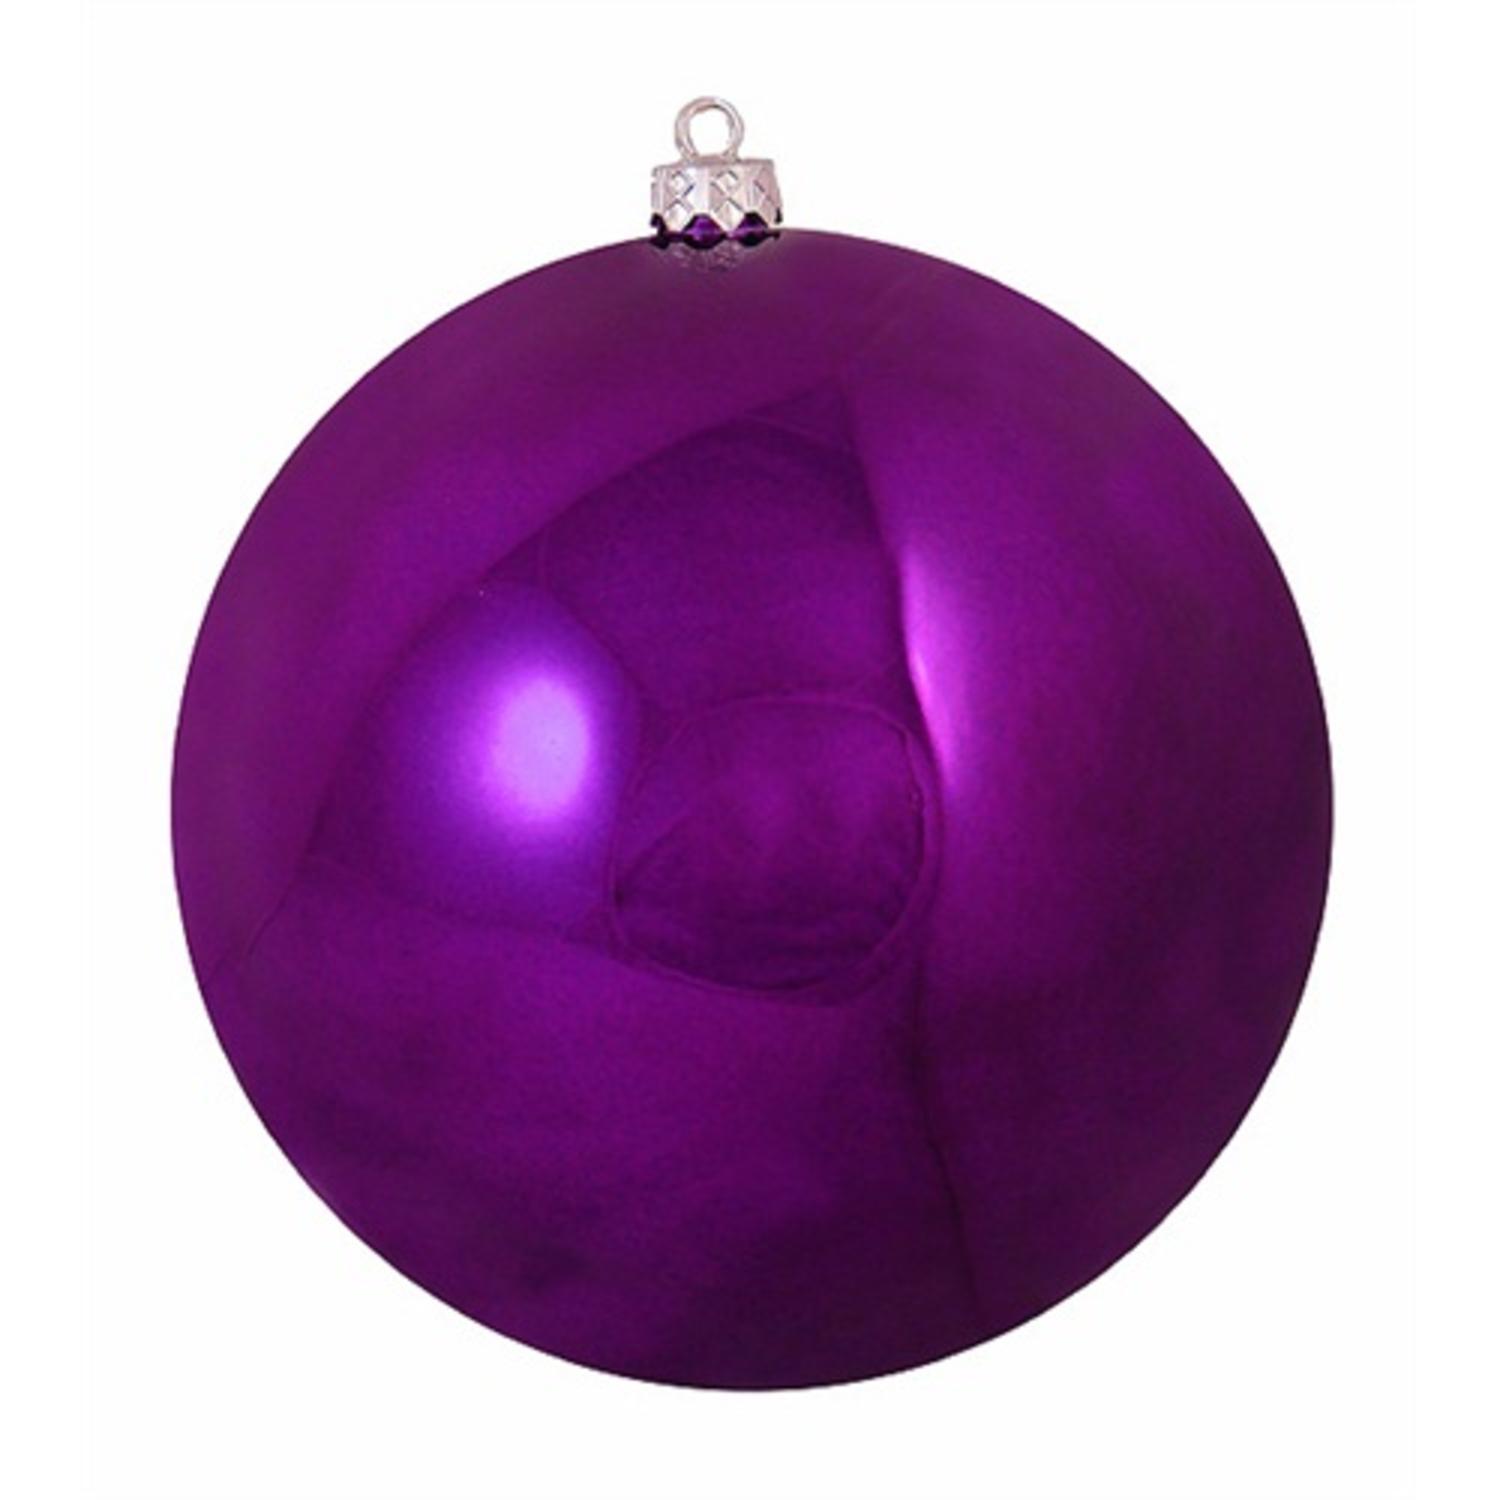 Shatterproof Shiny Plum Purple Christmas Ball Ornament 4